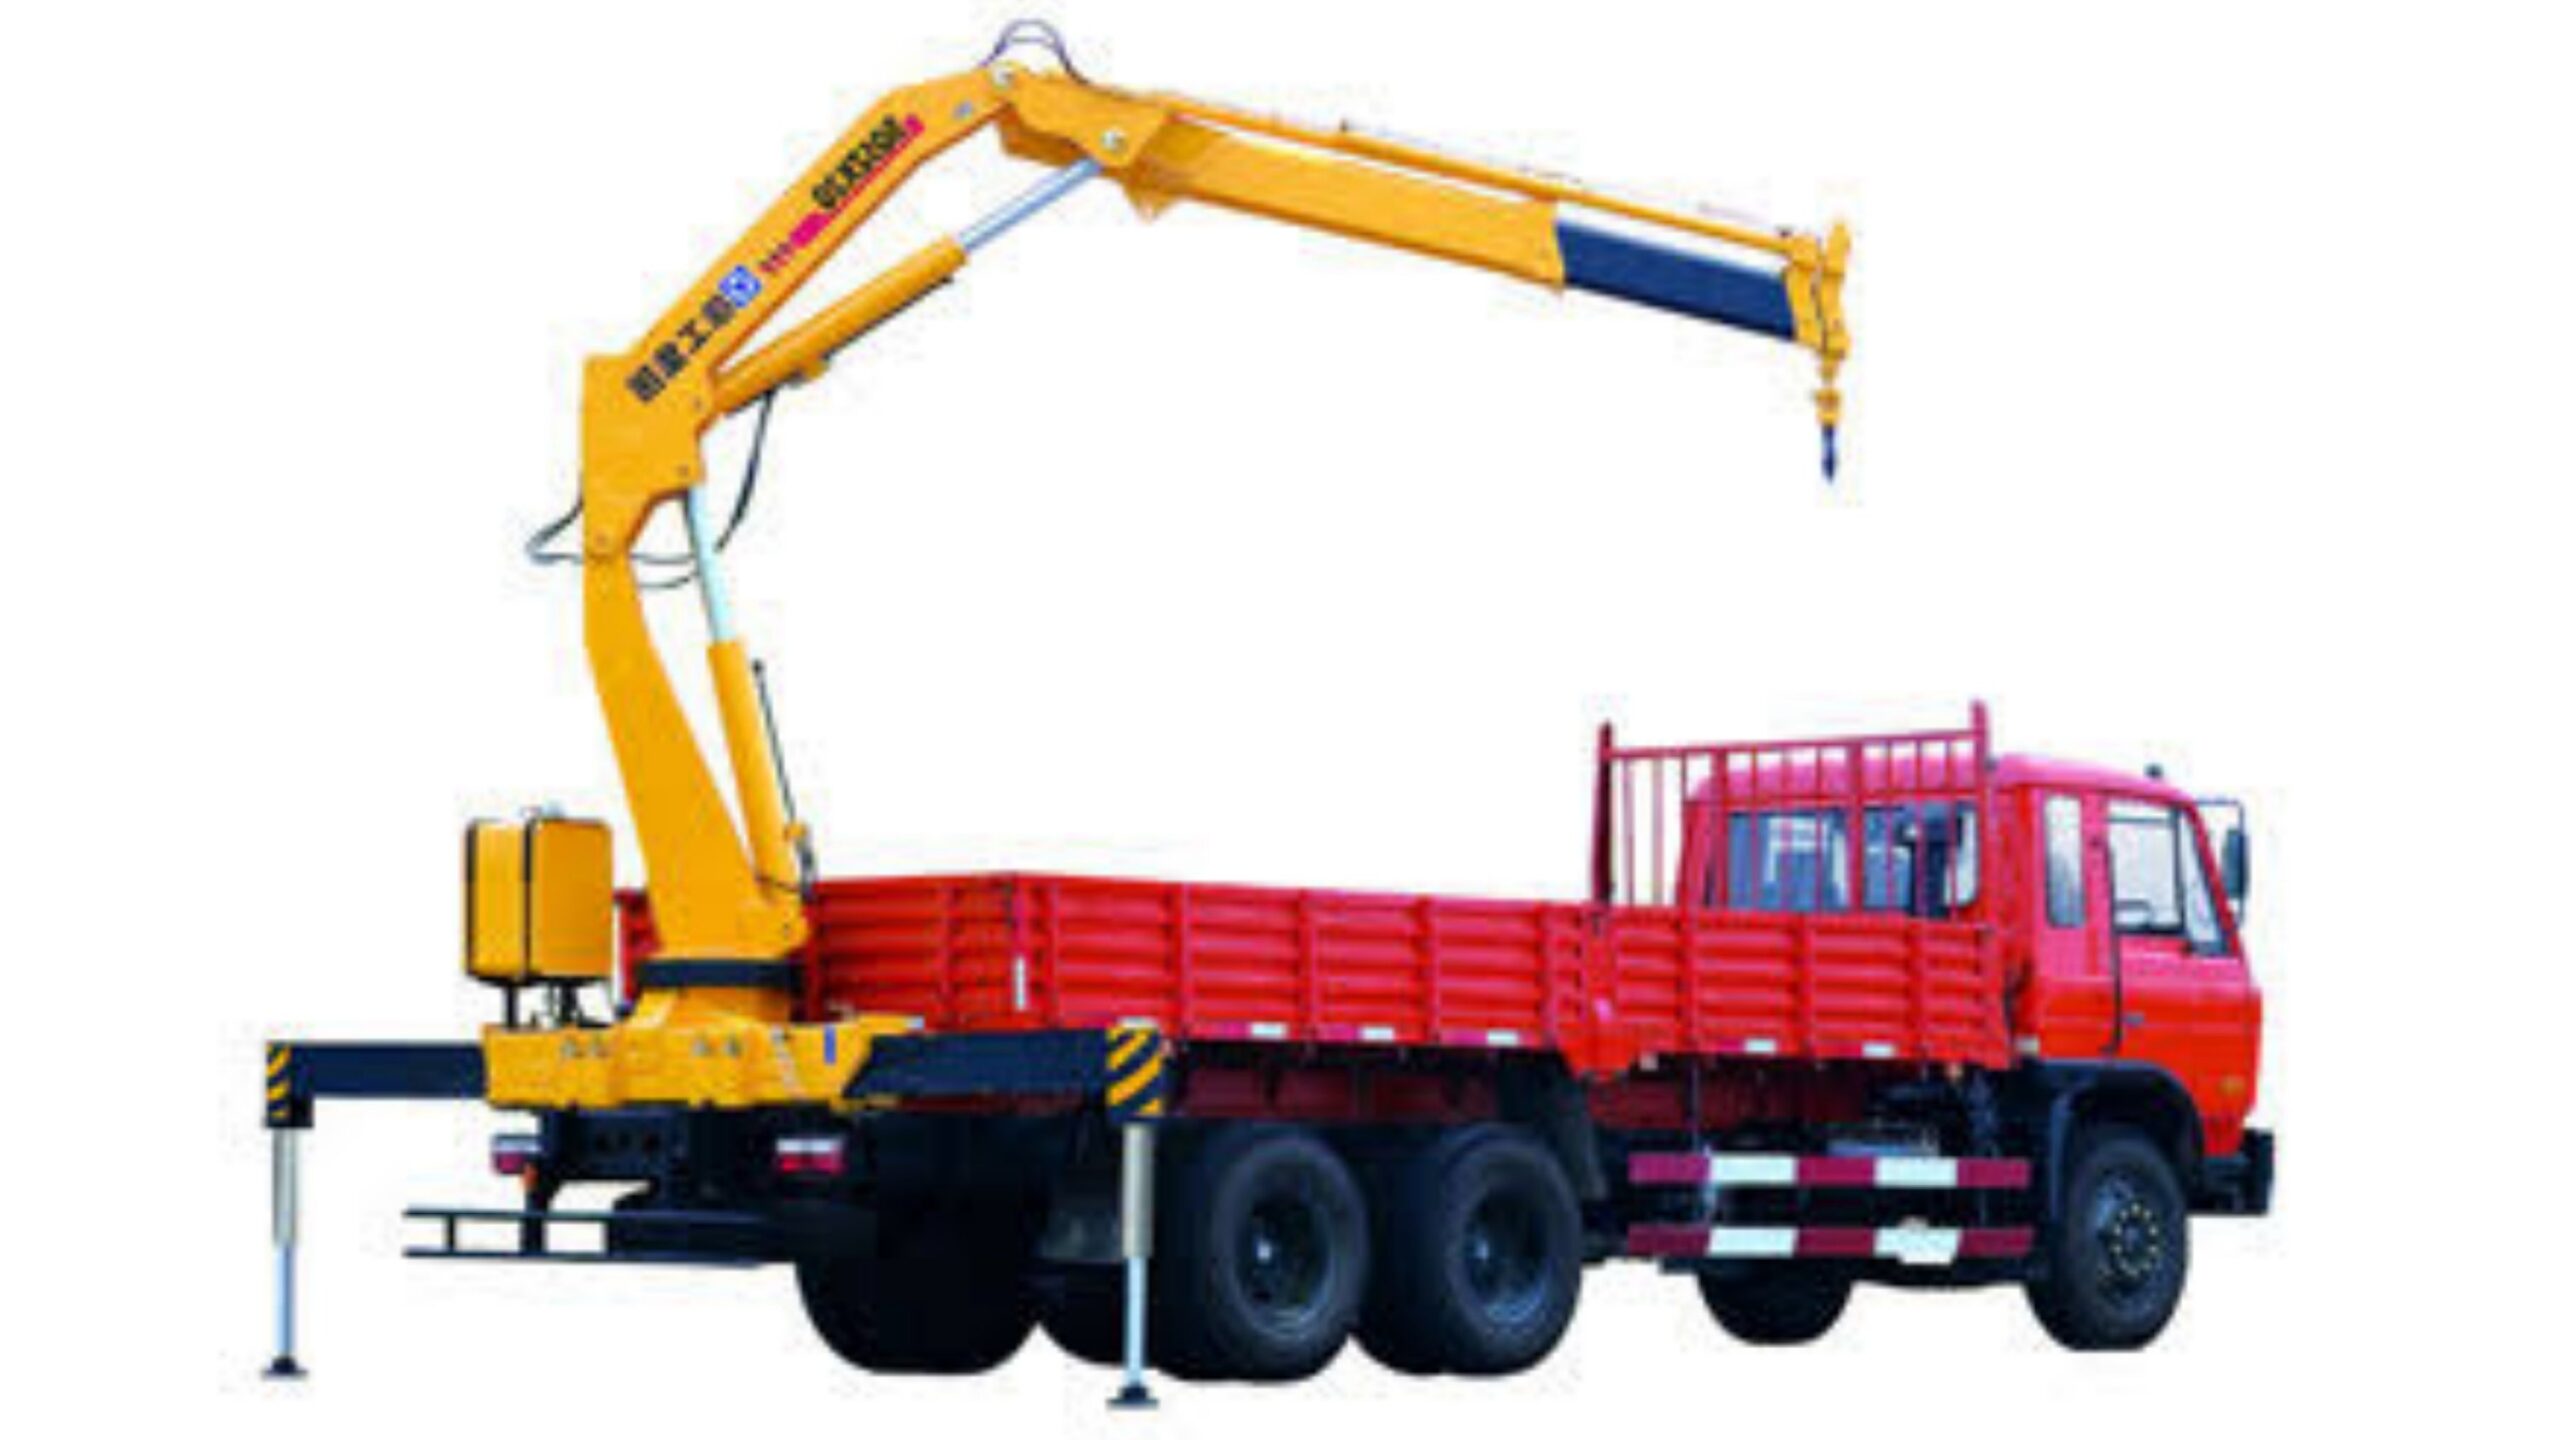 truck mounted crane